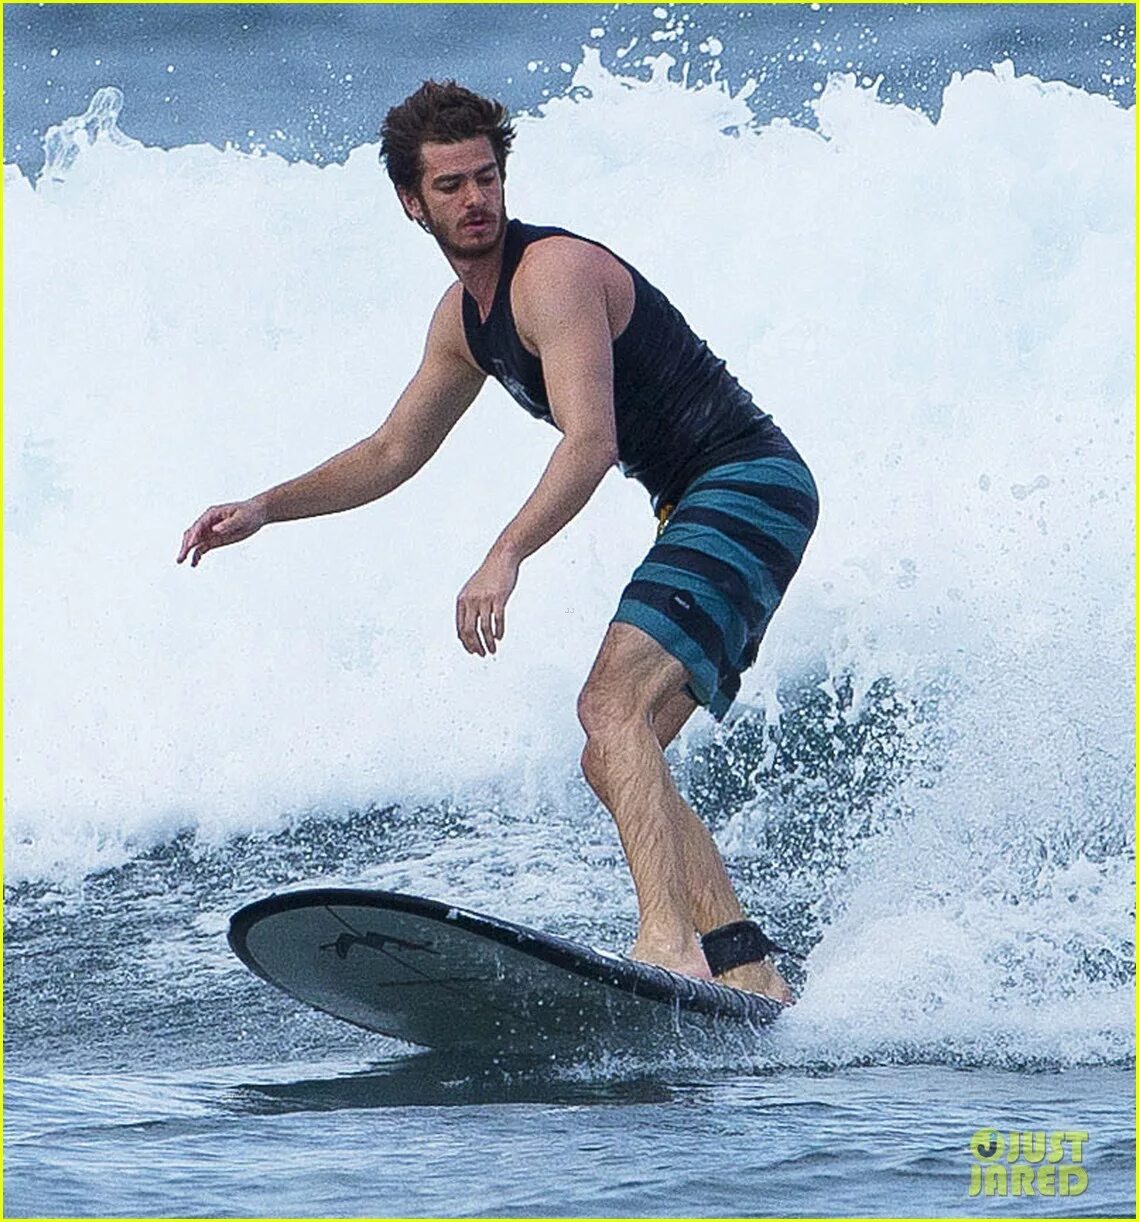 Andy stone. Эндрю Гарфилд серфинг. Энди Стоун. Эндрю Гарфилд серфинг фото. Andrew Garfield in Beach advertisement.